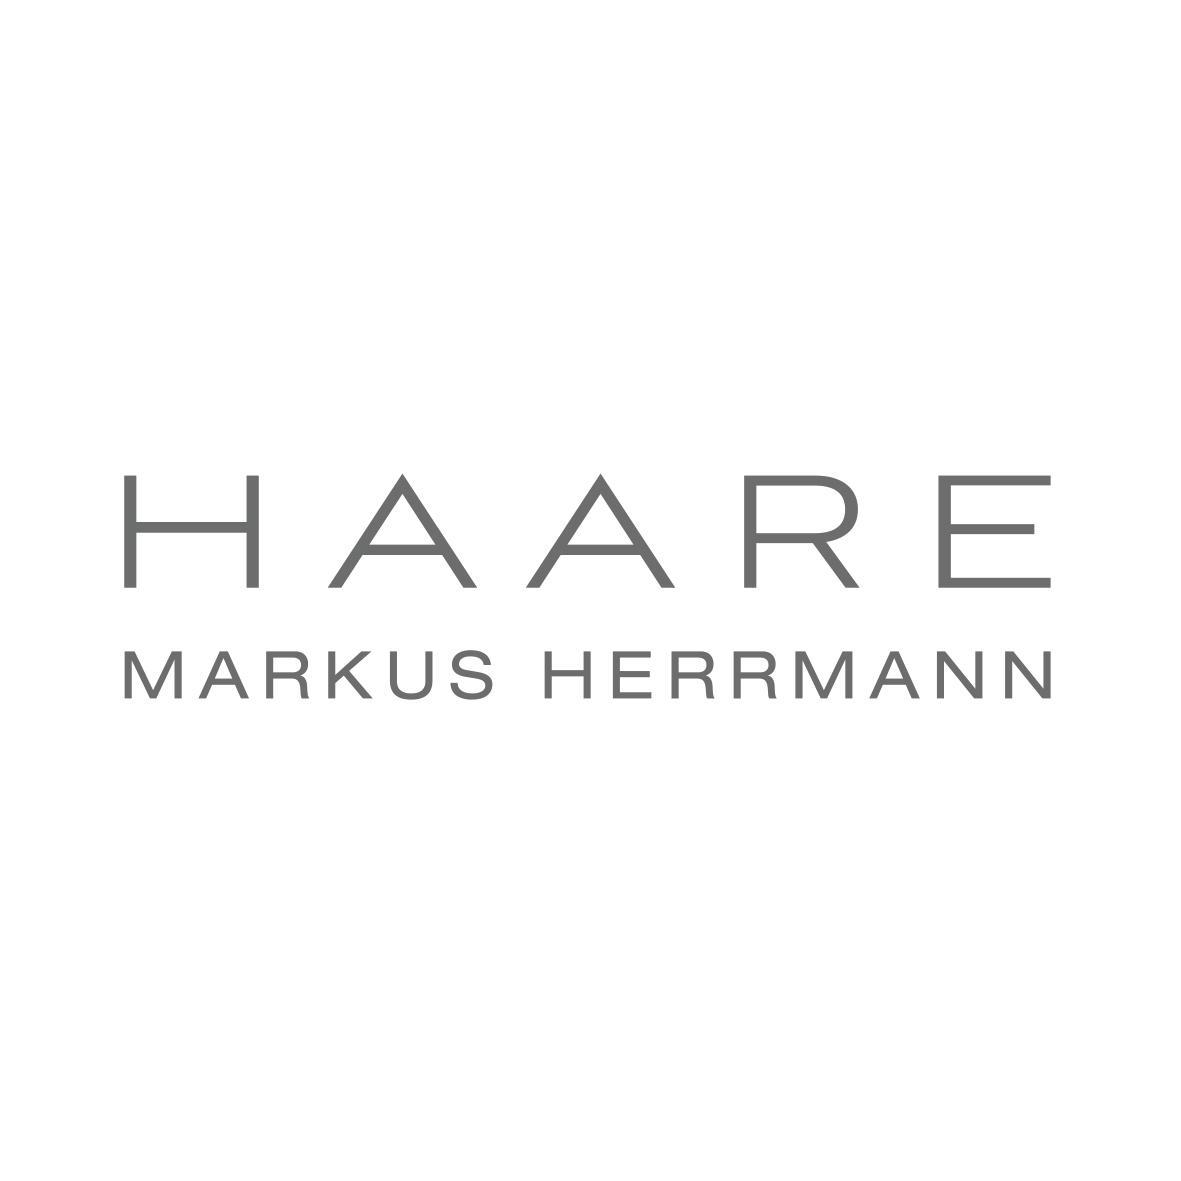 Haare Markus Herrmann in Ravensburg - Logo